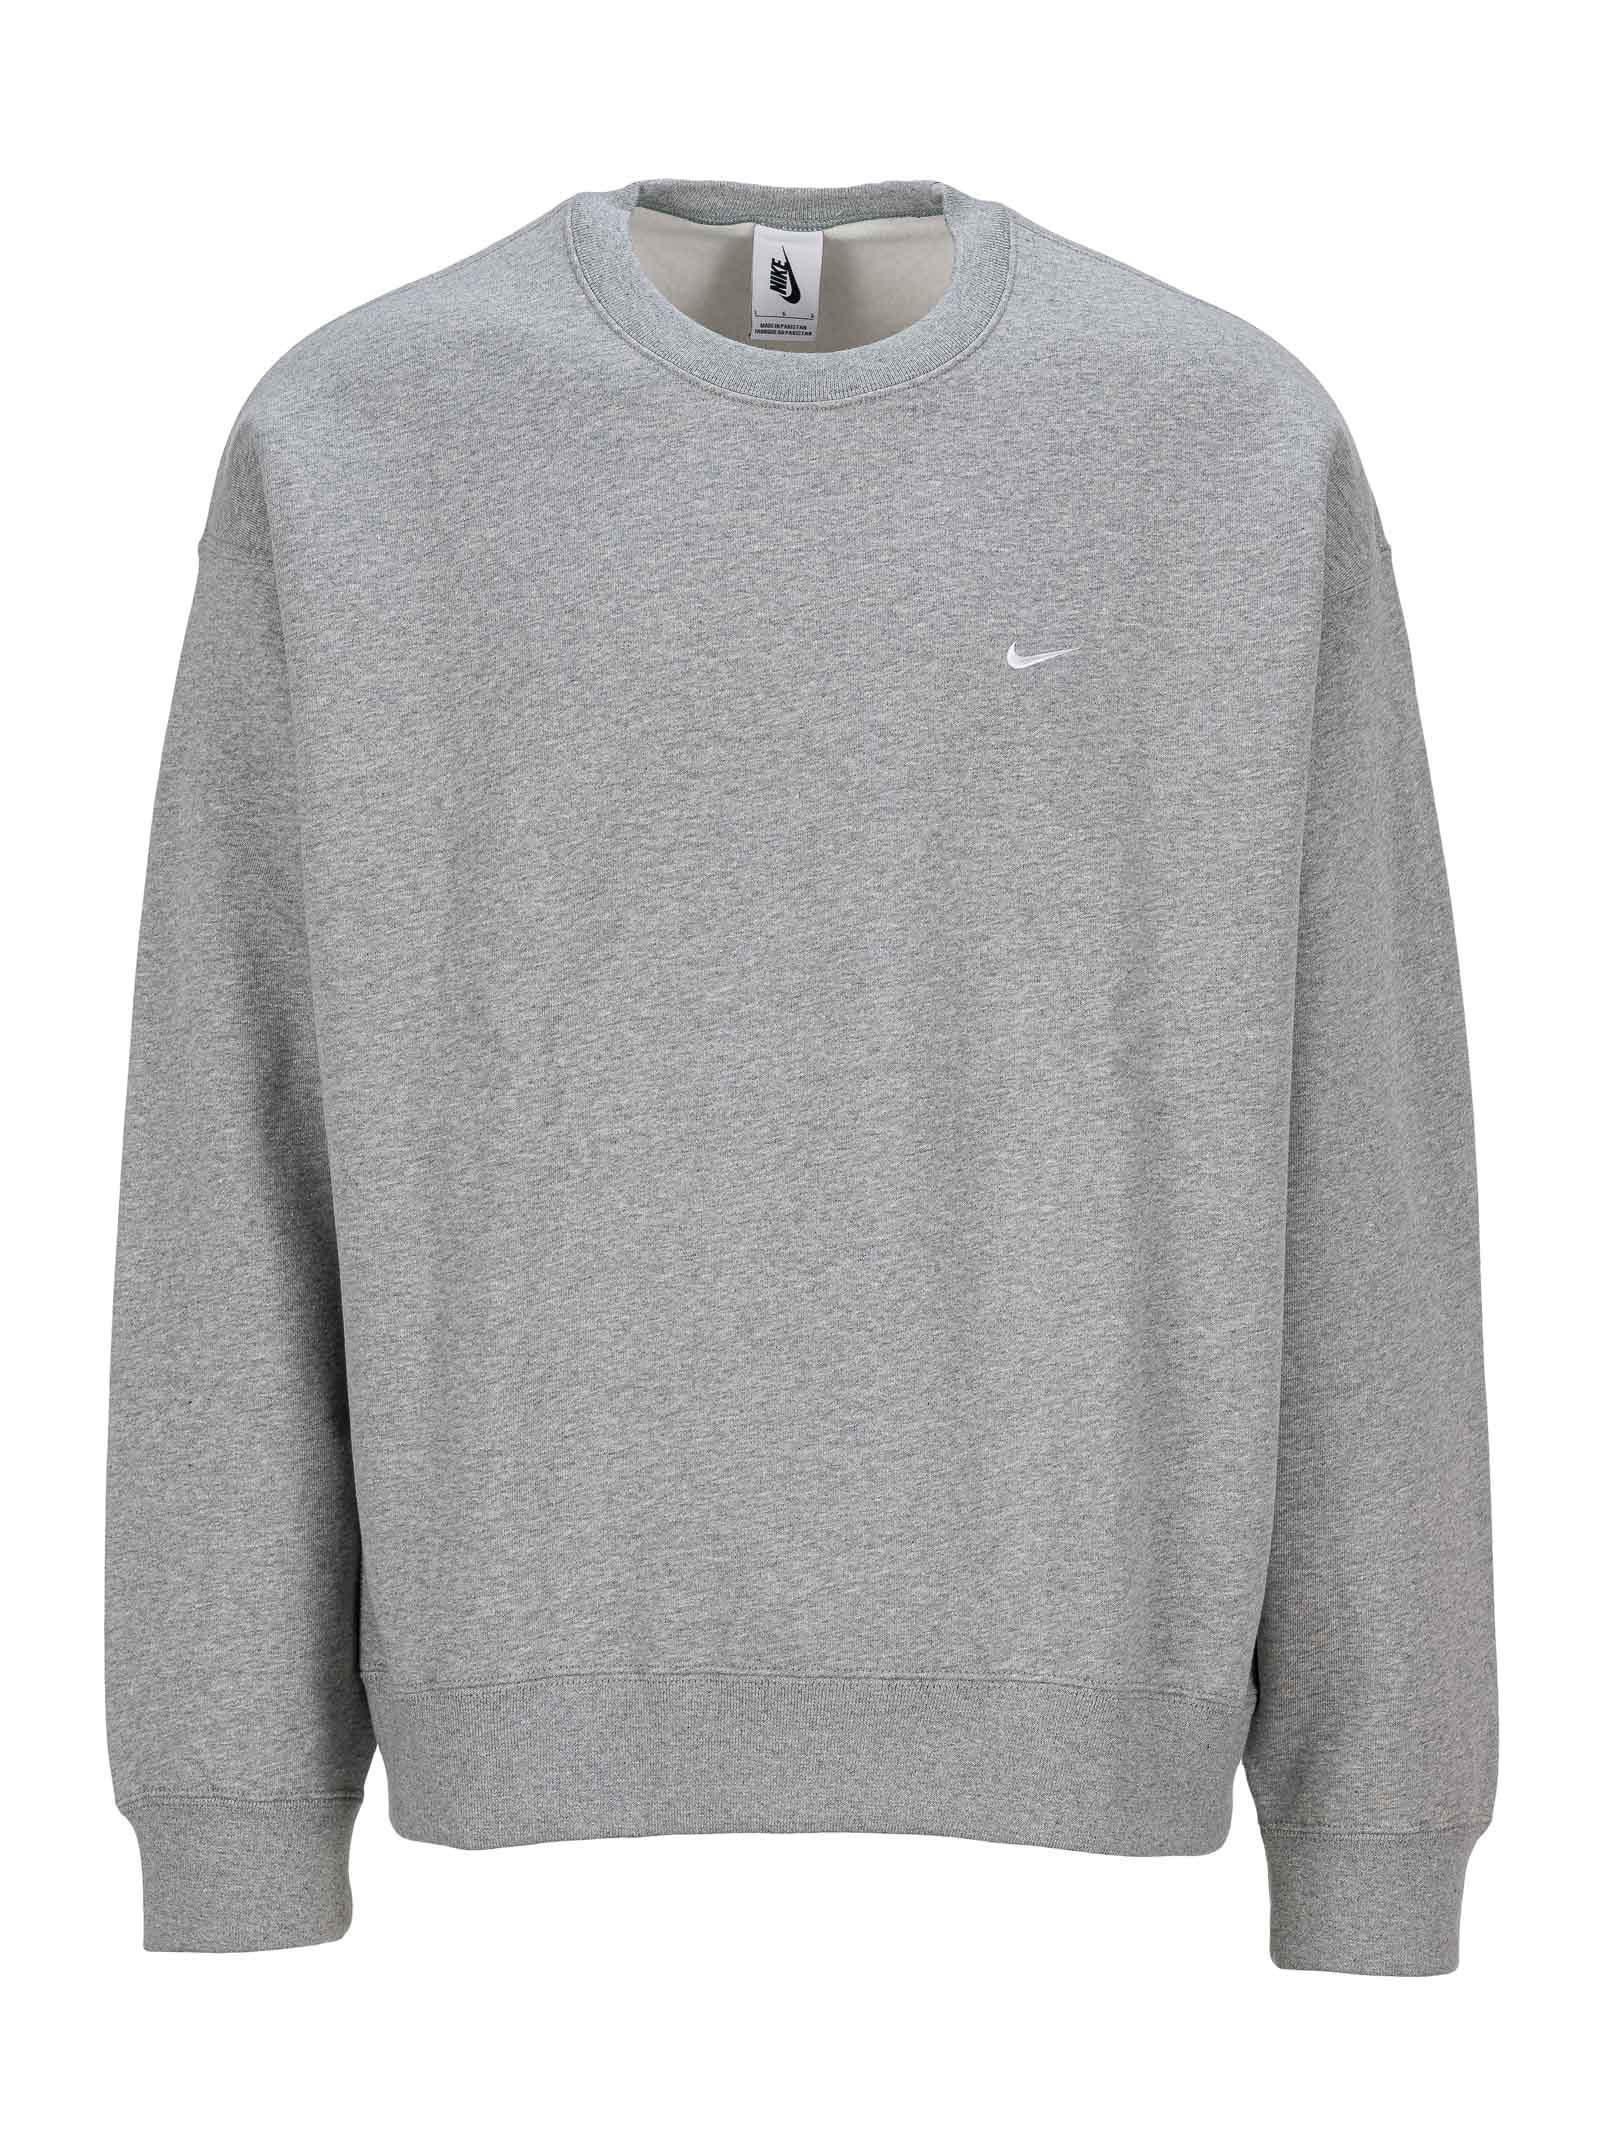 Nike Ltd Nikelab Sweatshirt